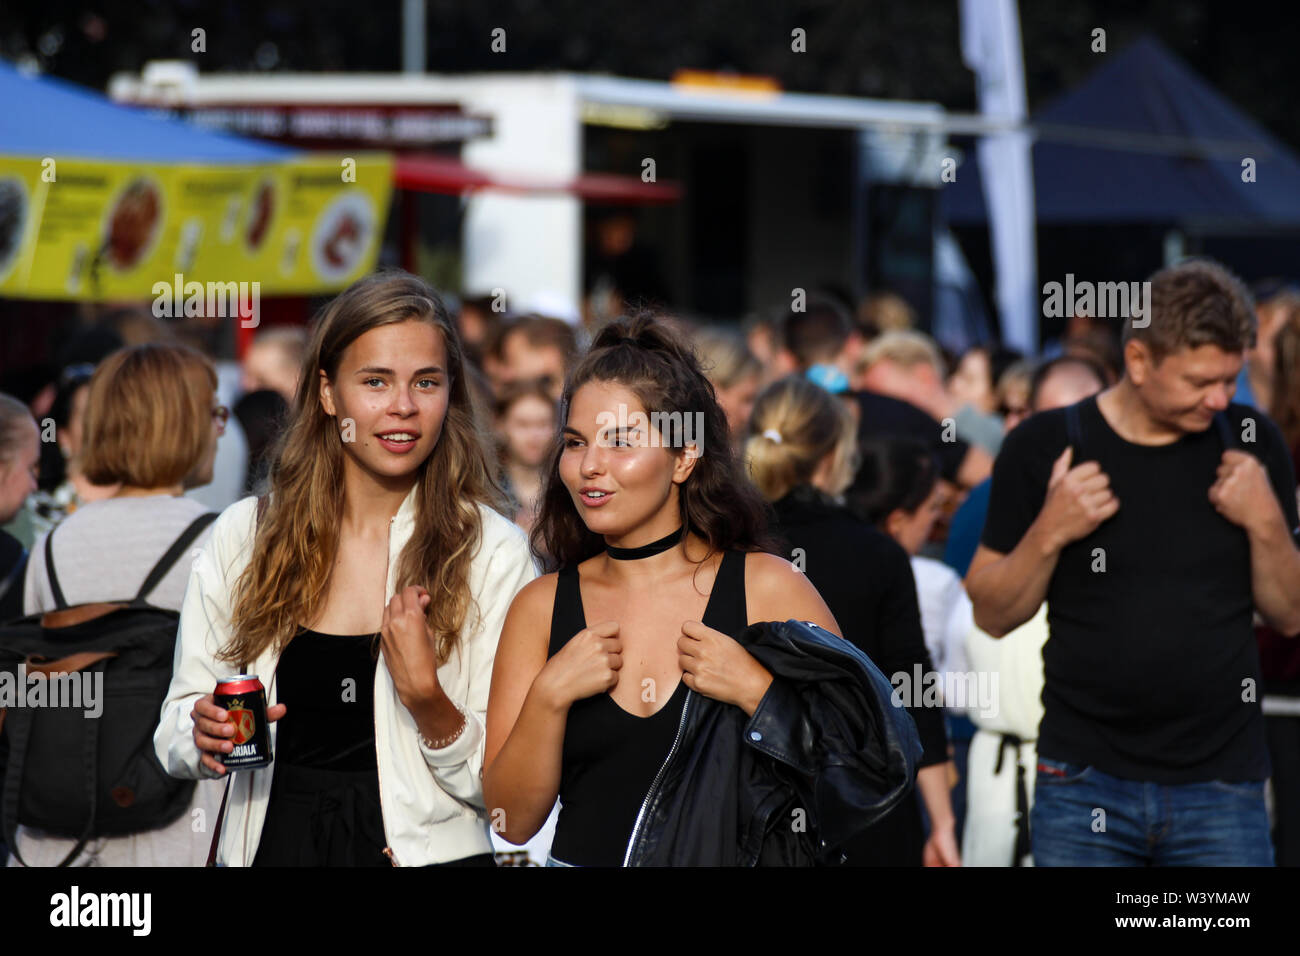 Young women at Kallio Block Party in Helsinki, Finland Stock Photo